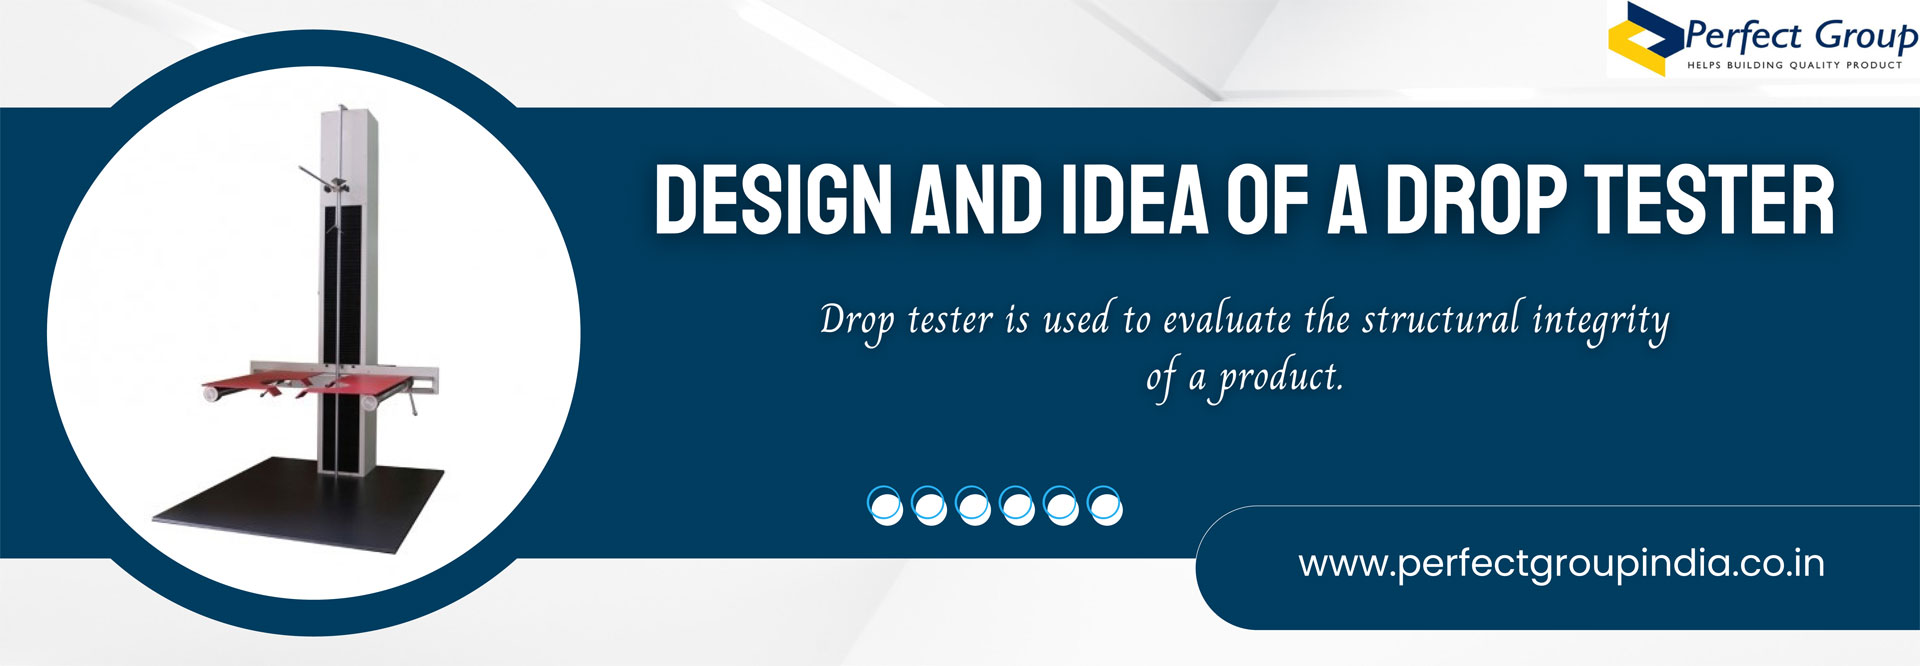 Design And Idea Of A Drop Tester